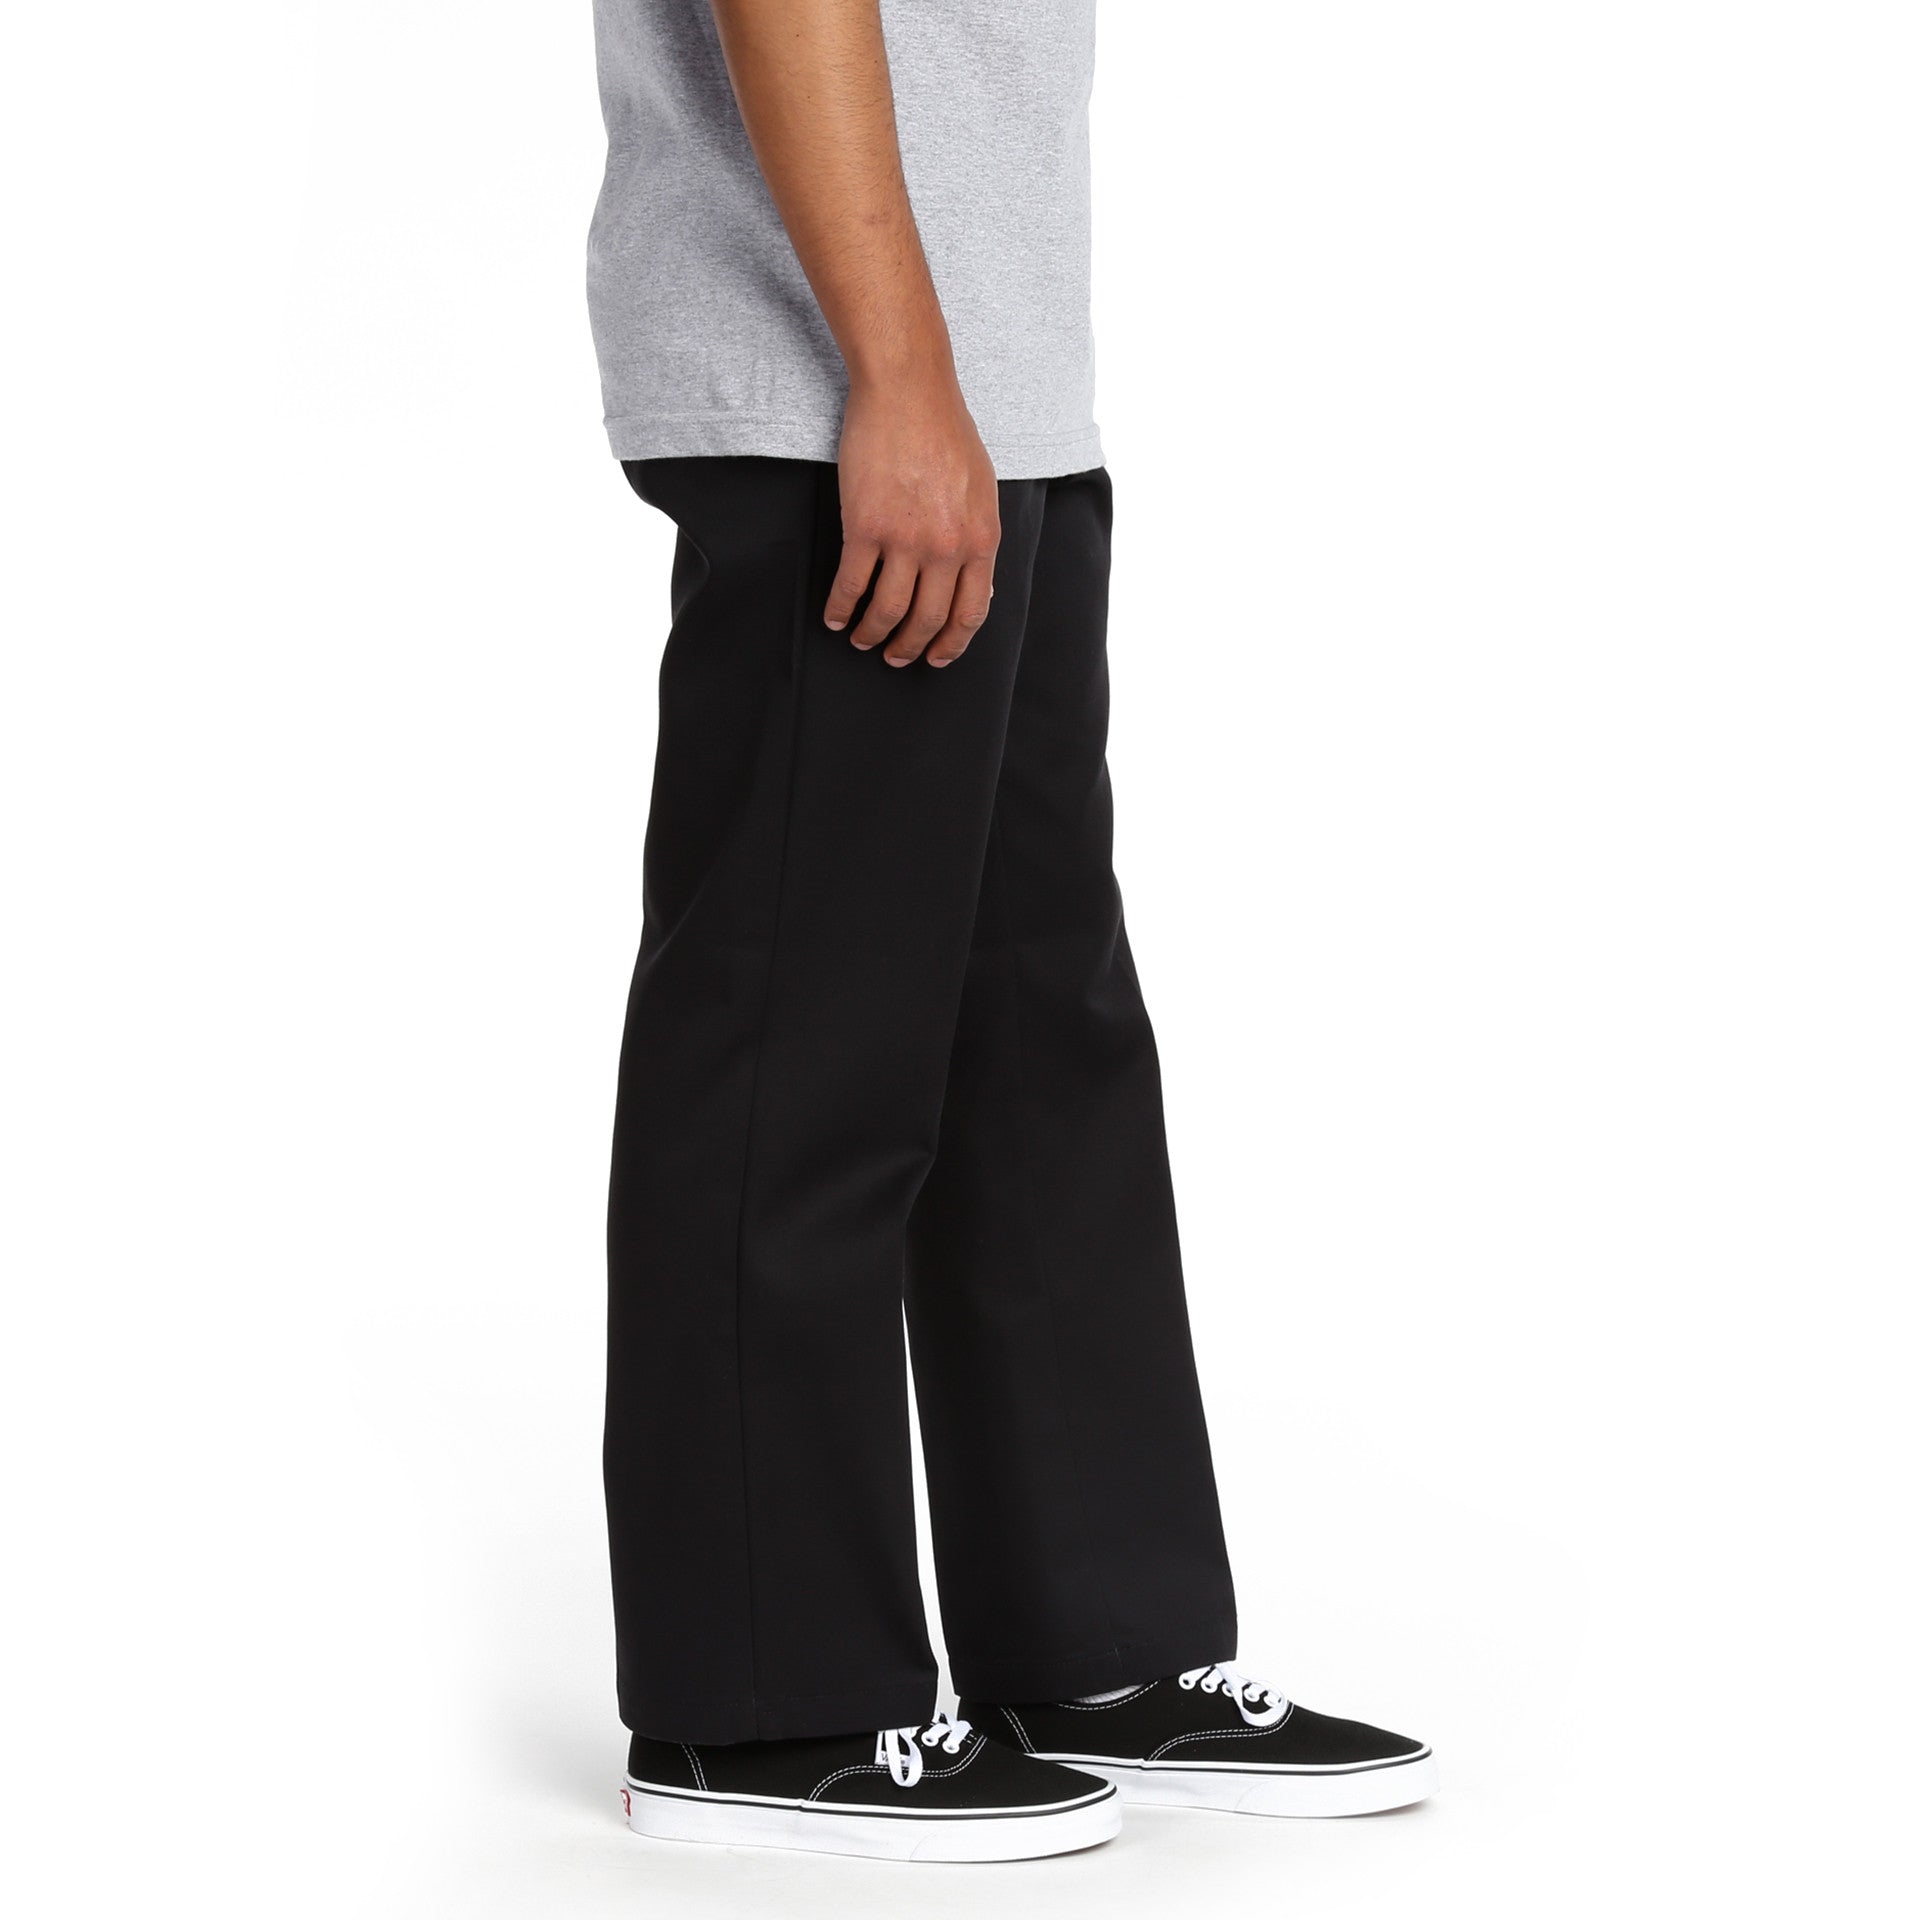 DICKIES - Worker trousers 874 White – suuupply